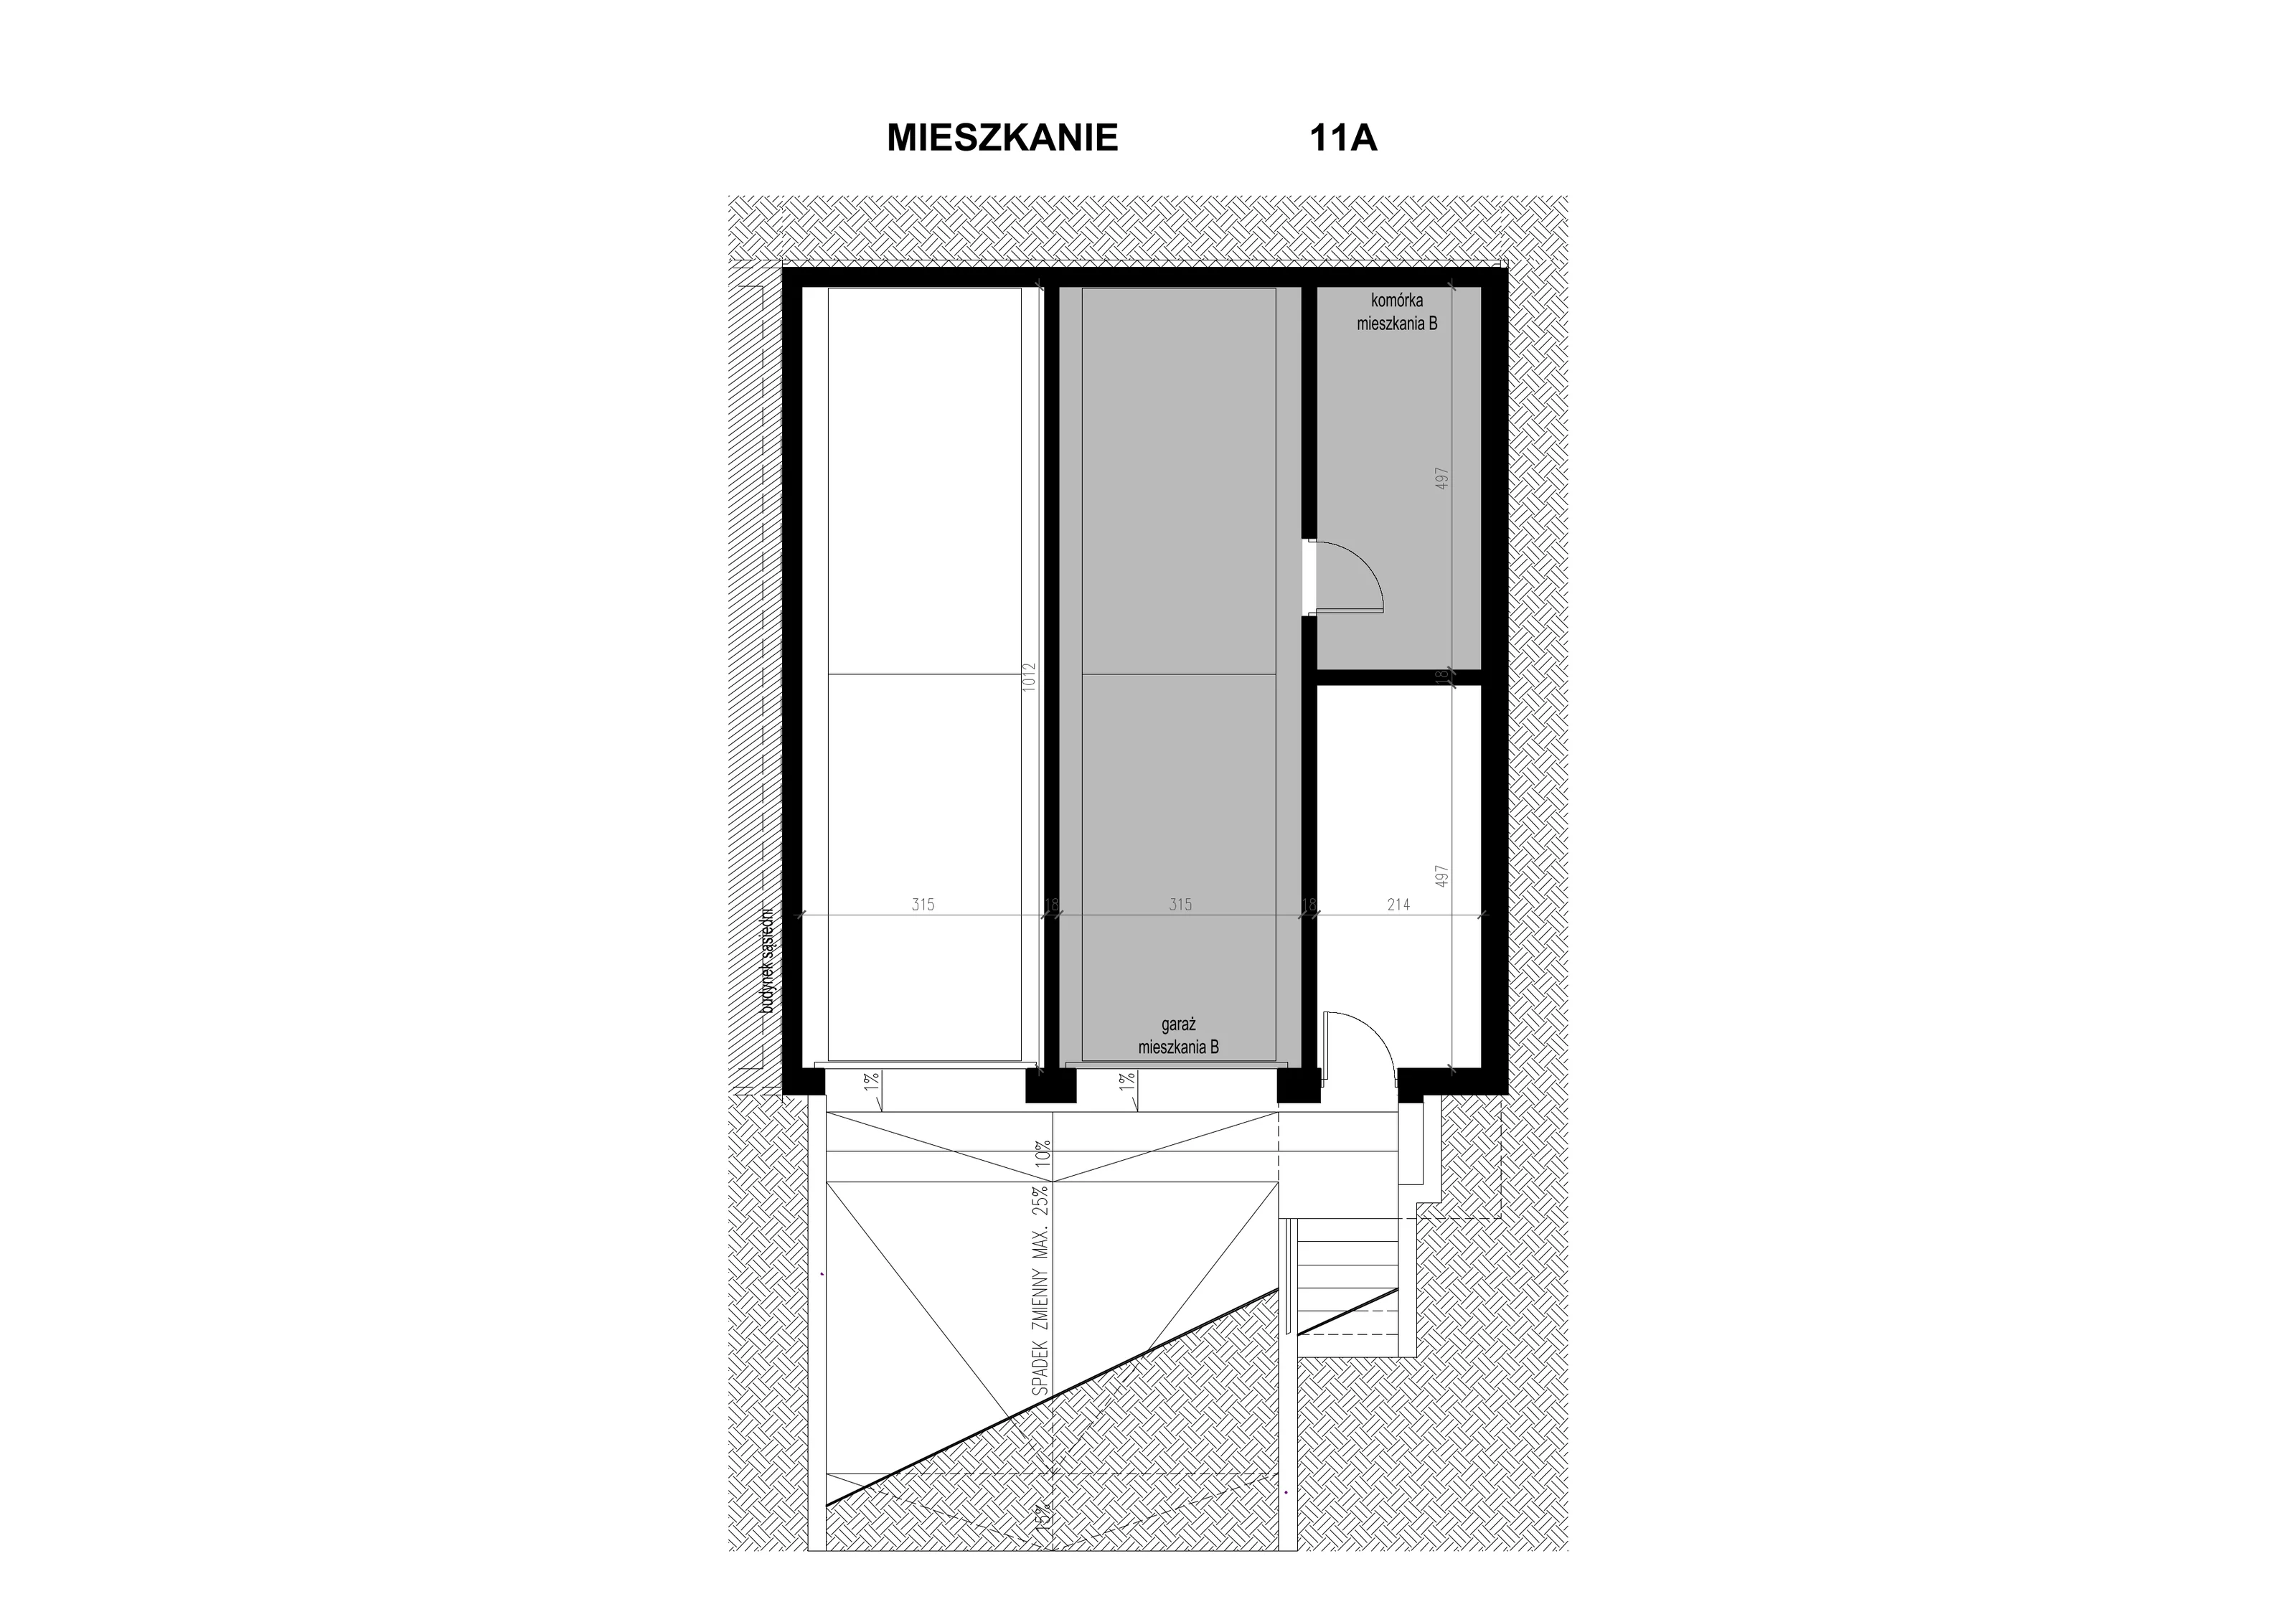 Apartament 80,15 m², parter, oferta nr 1.11A, Osiedle BO, Wrocław, Kowale, ul. Bociana